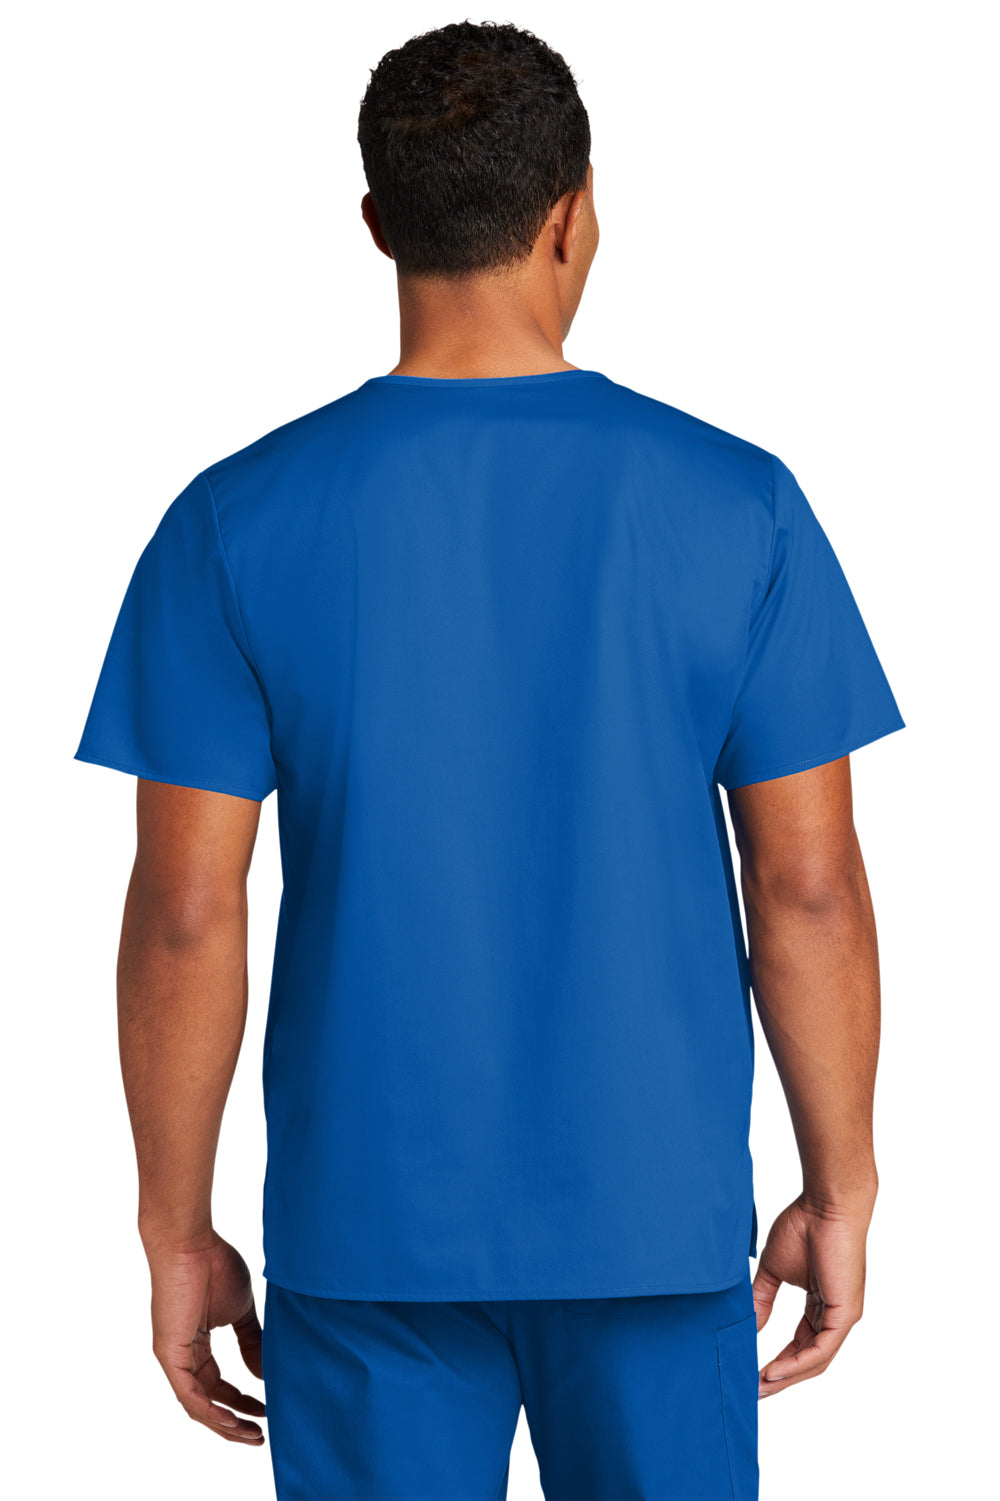 Wonderwink WW3160 WorkFlex Short Sleeve V-Neck Shirt w/ Pocket Royal Blue Back